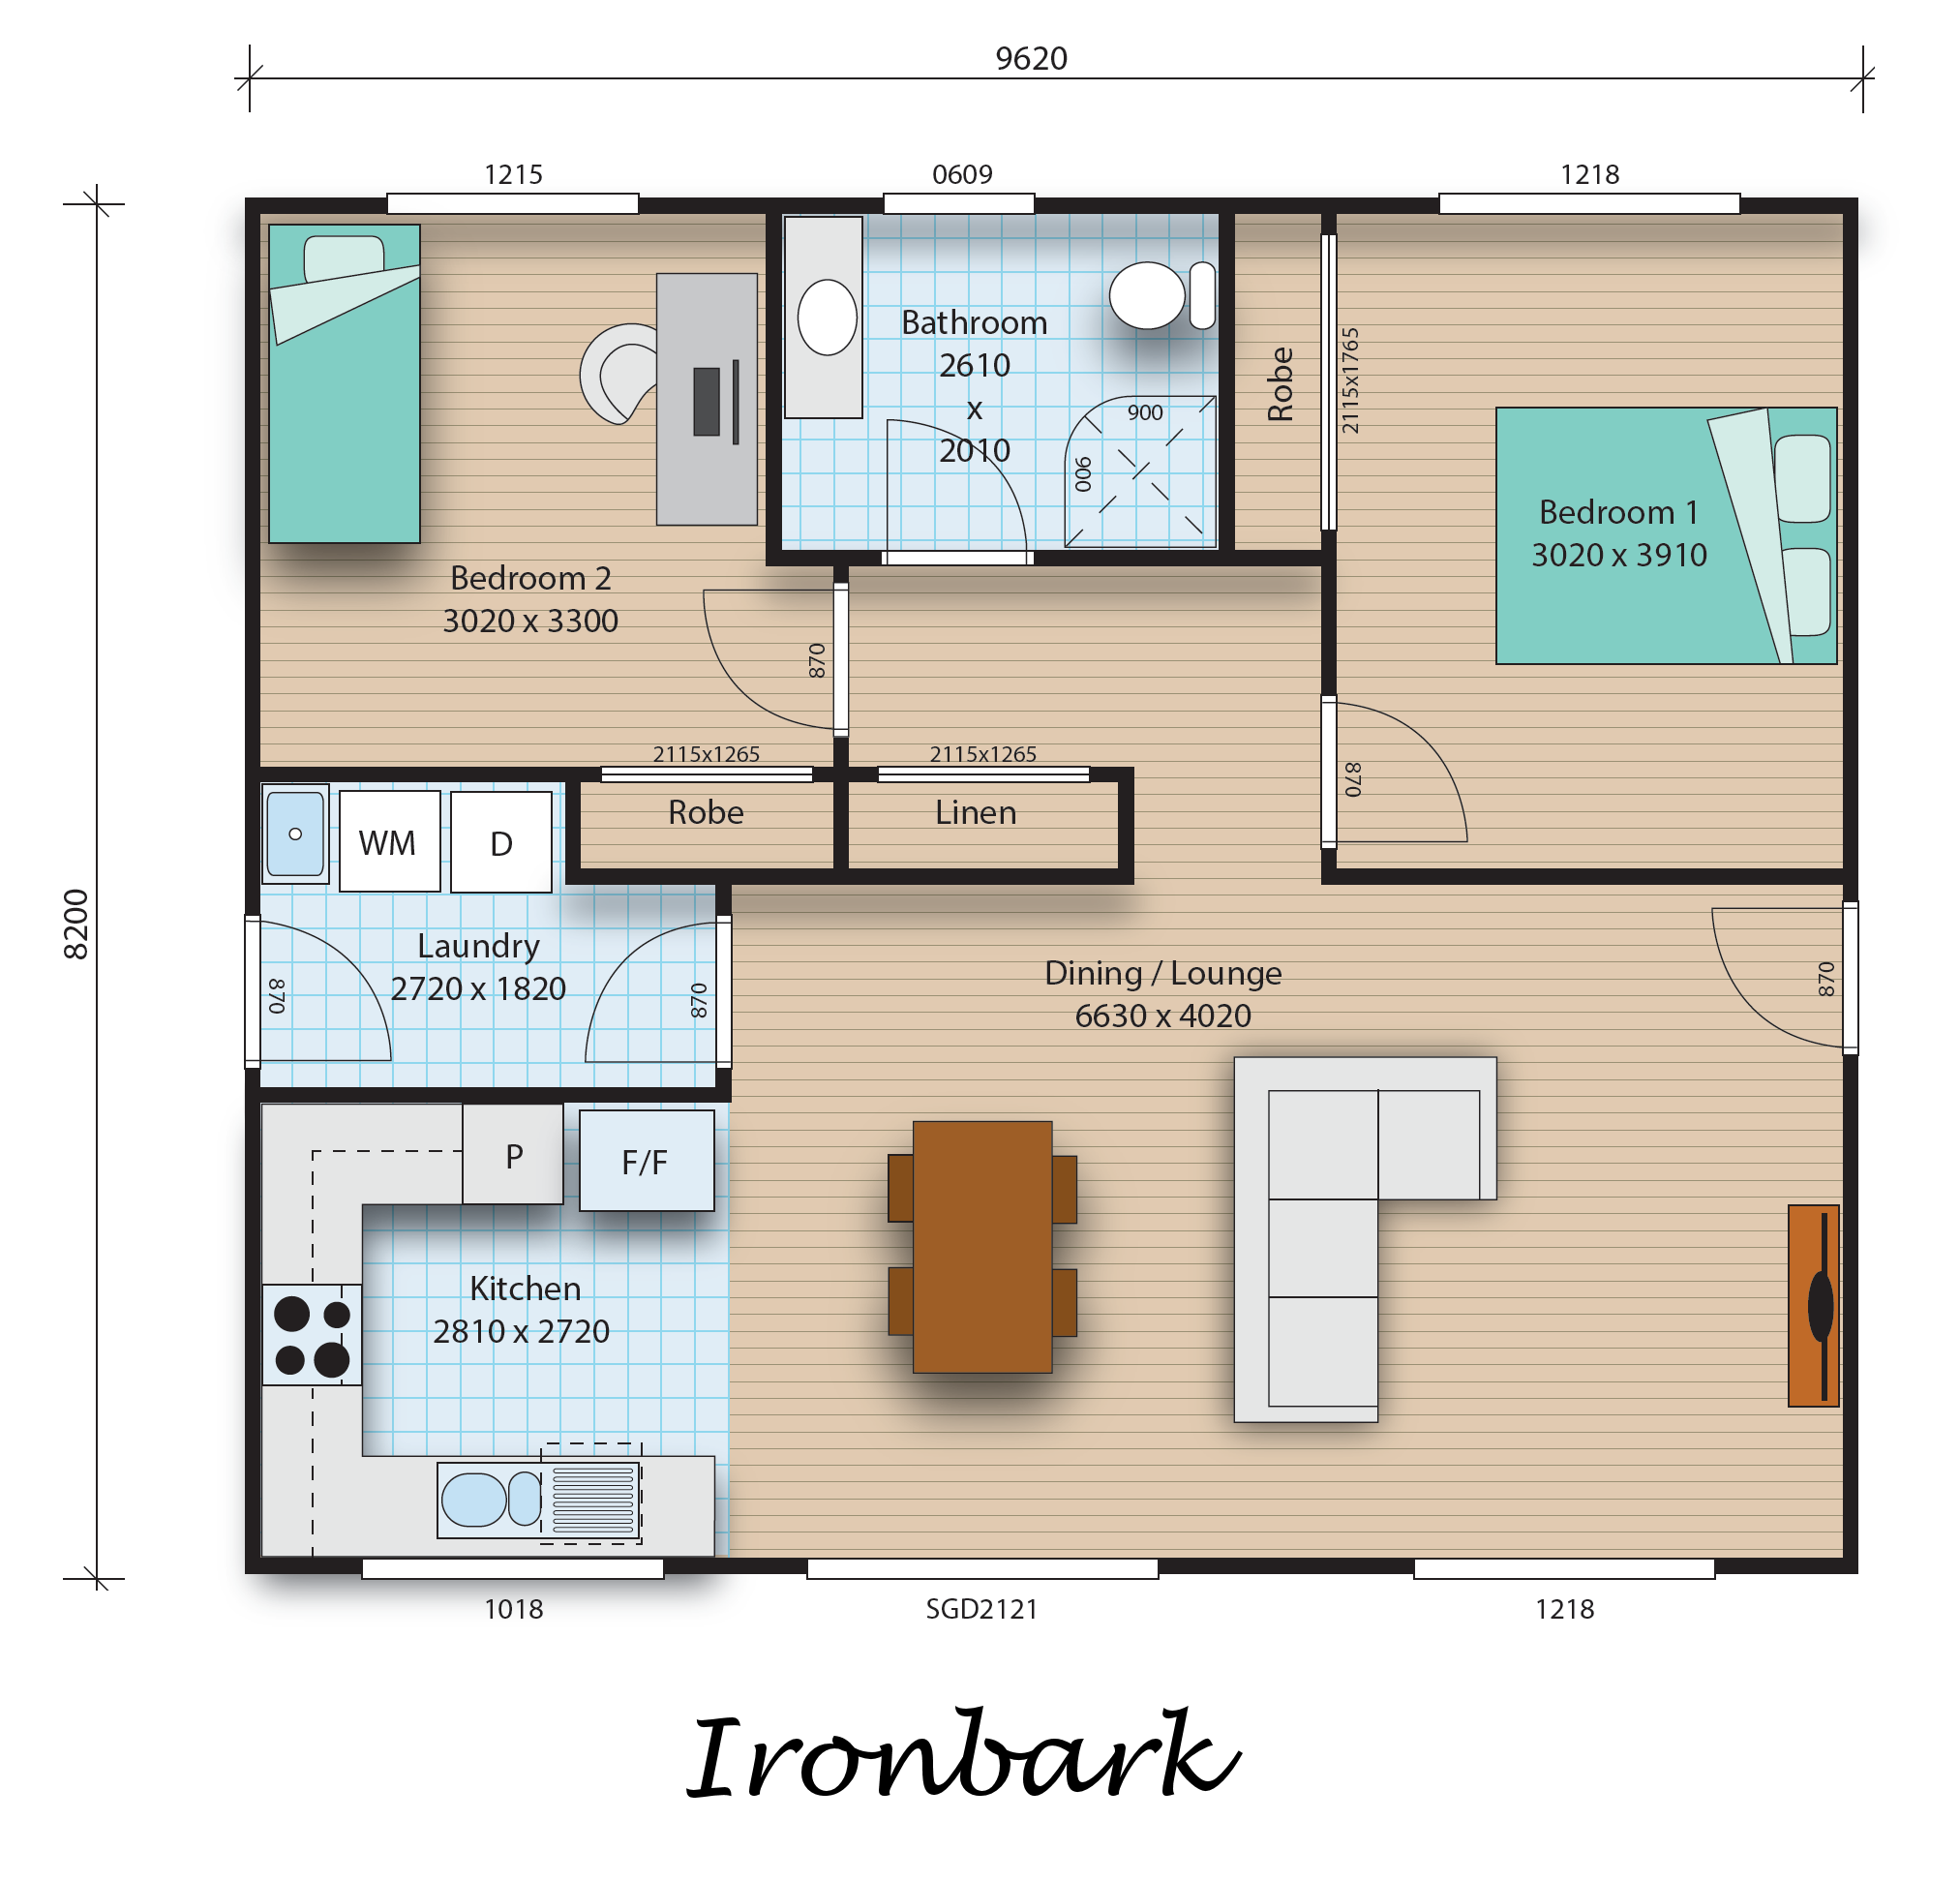 Ironbark floorplan image